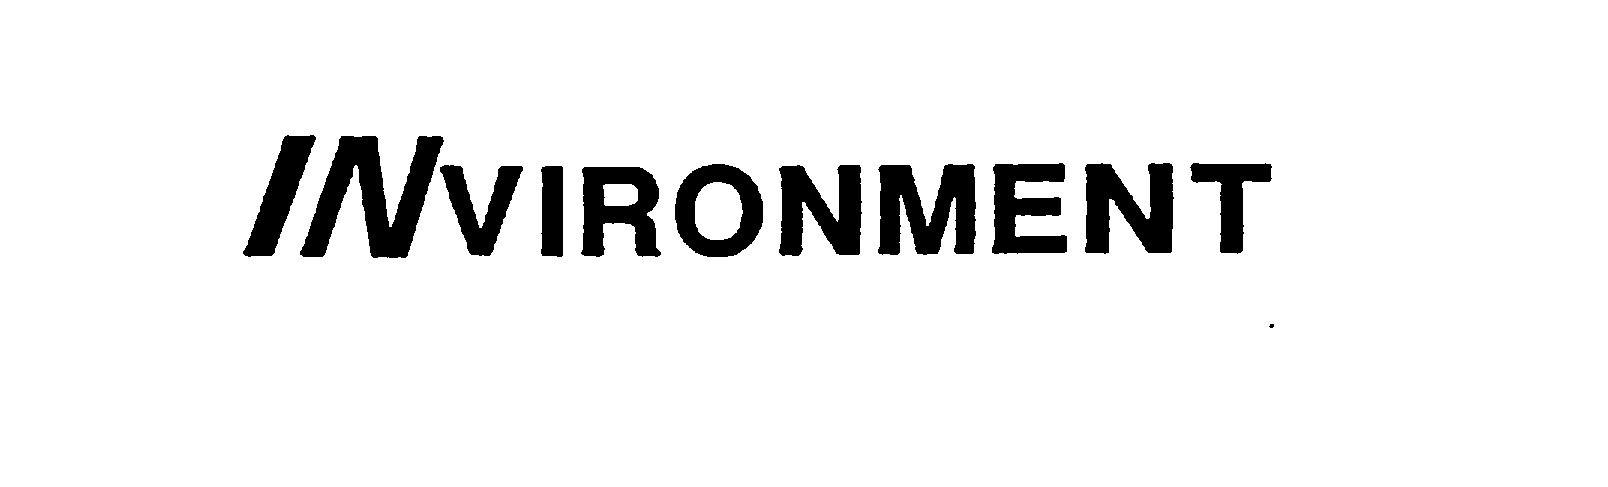 Trademark Logo INVIRONMENT